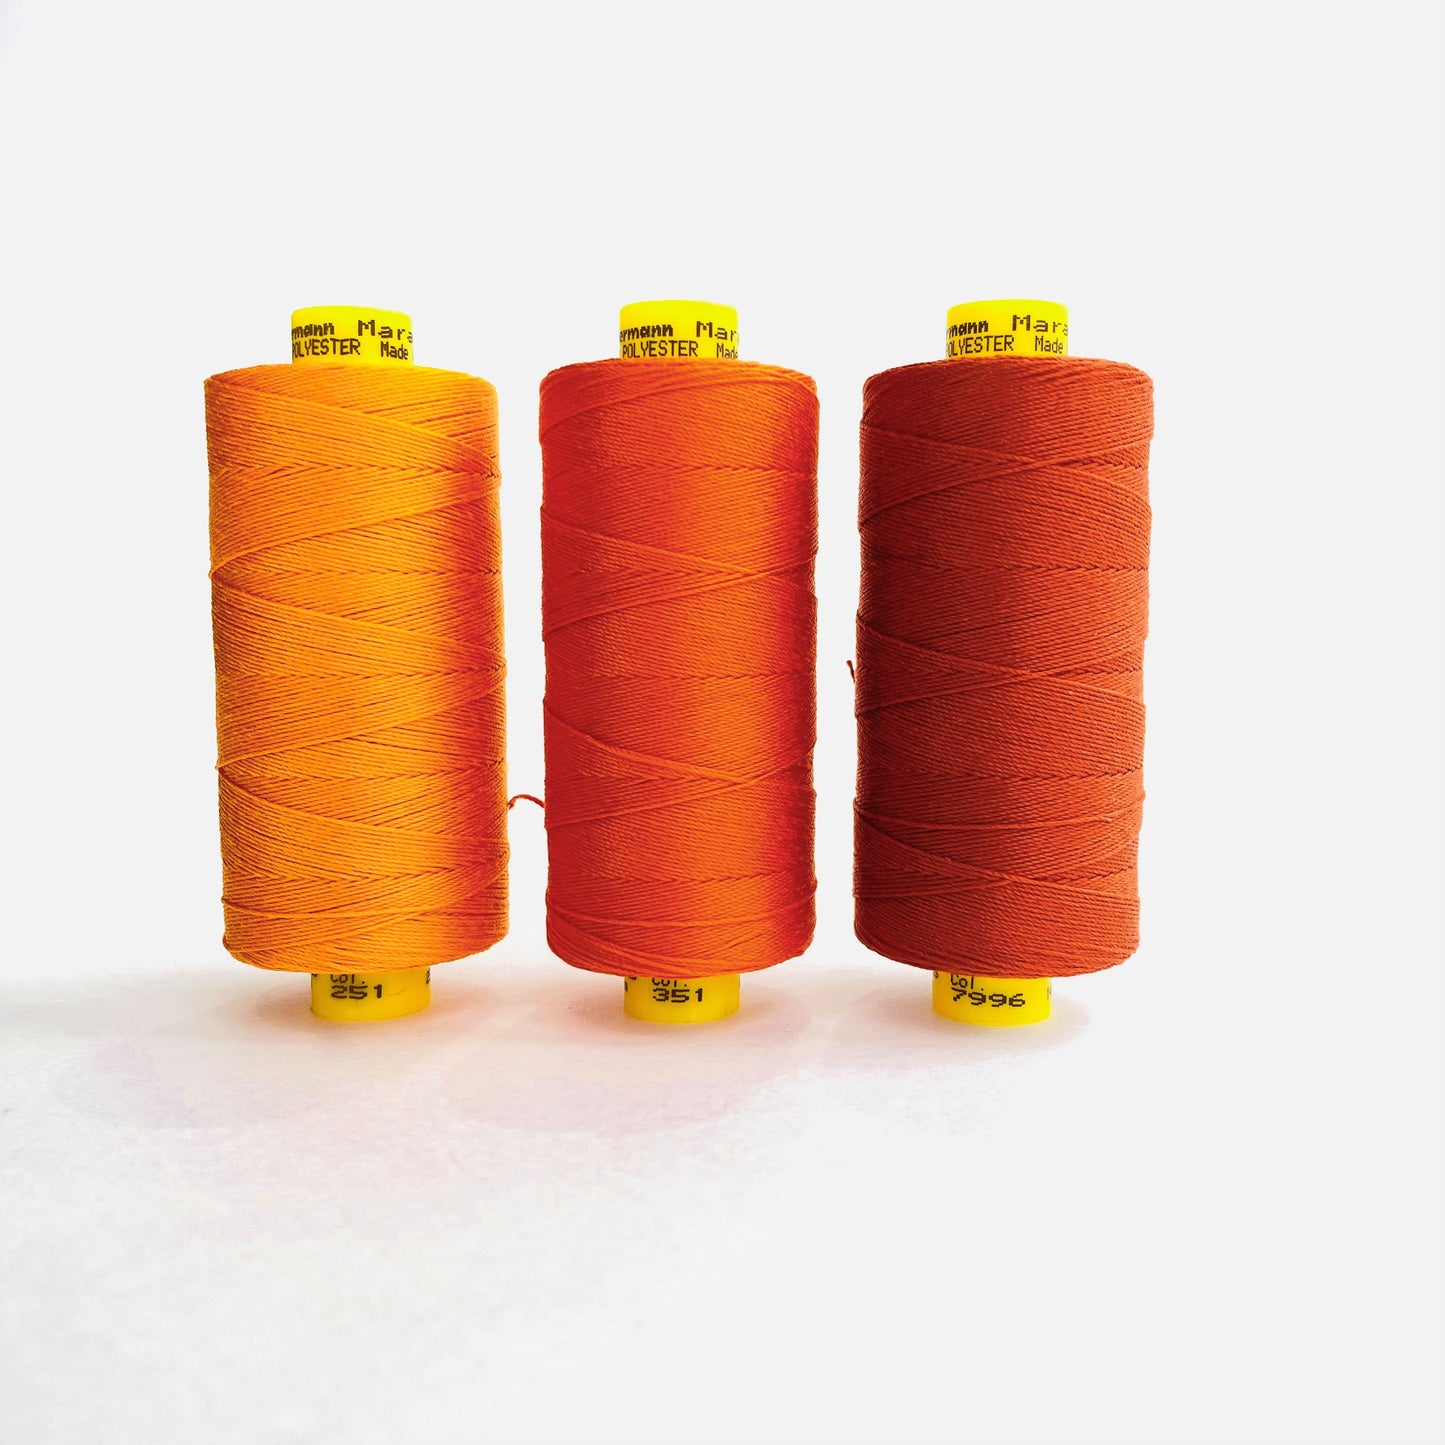 Gutermann Mara #30 Top-Stitch Sewing Thread 300m Spools (Orange & Rust shades) - Kleins Haberdashery